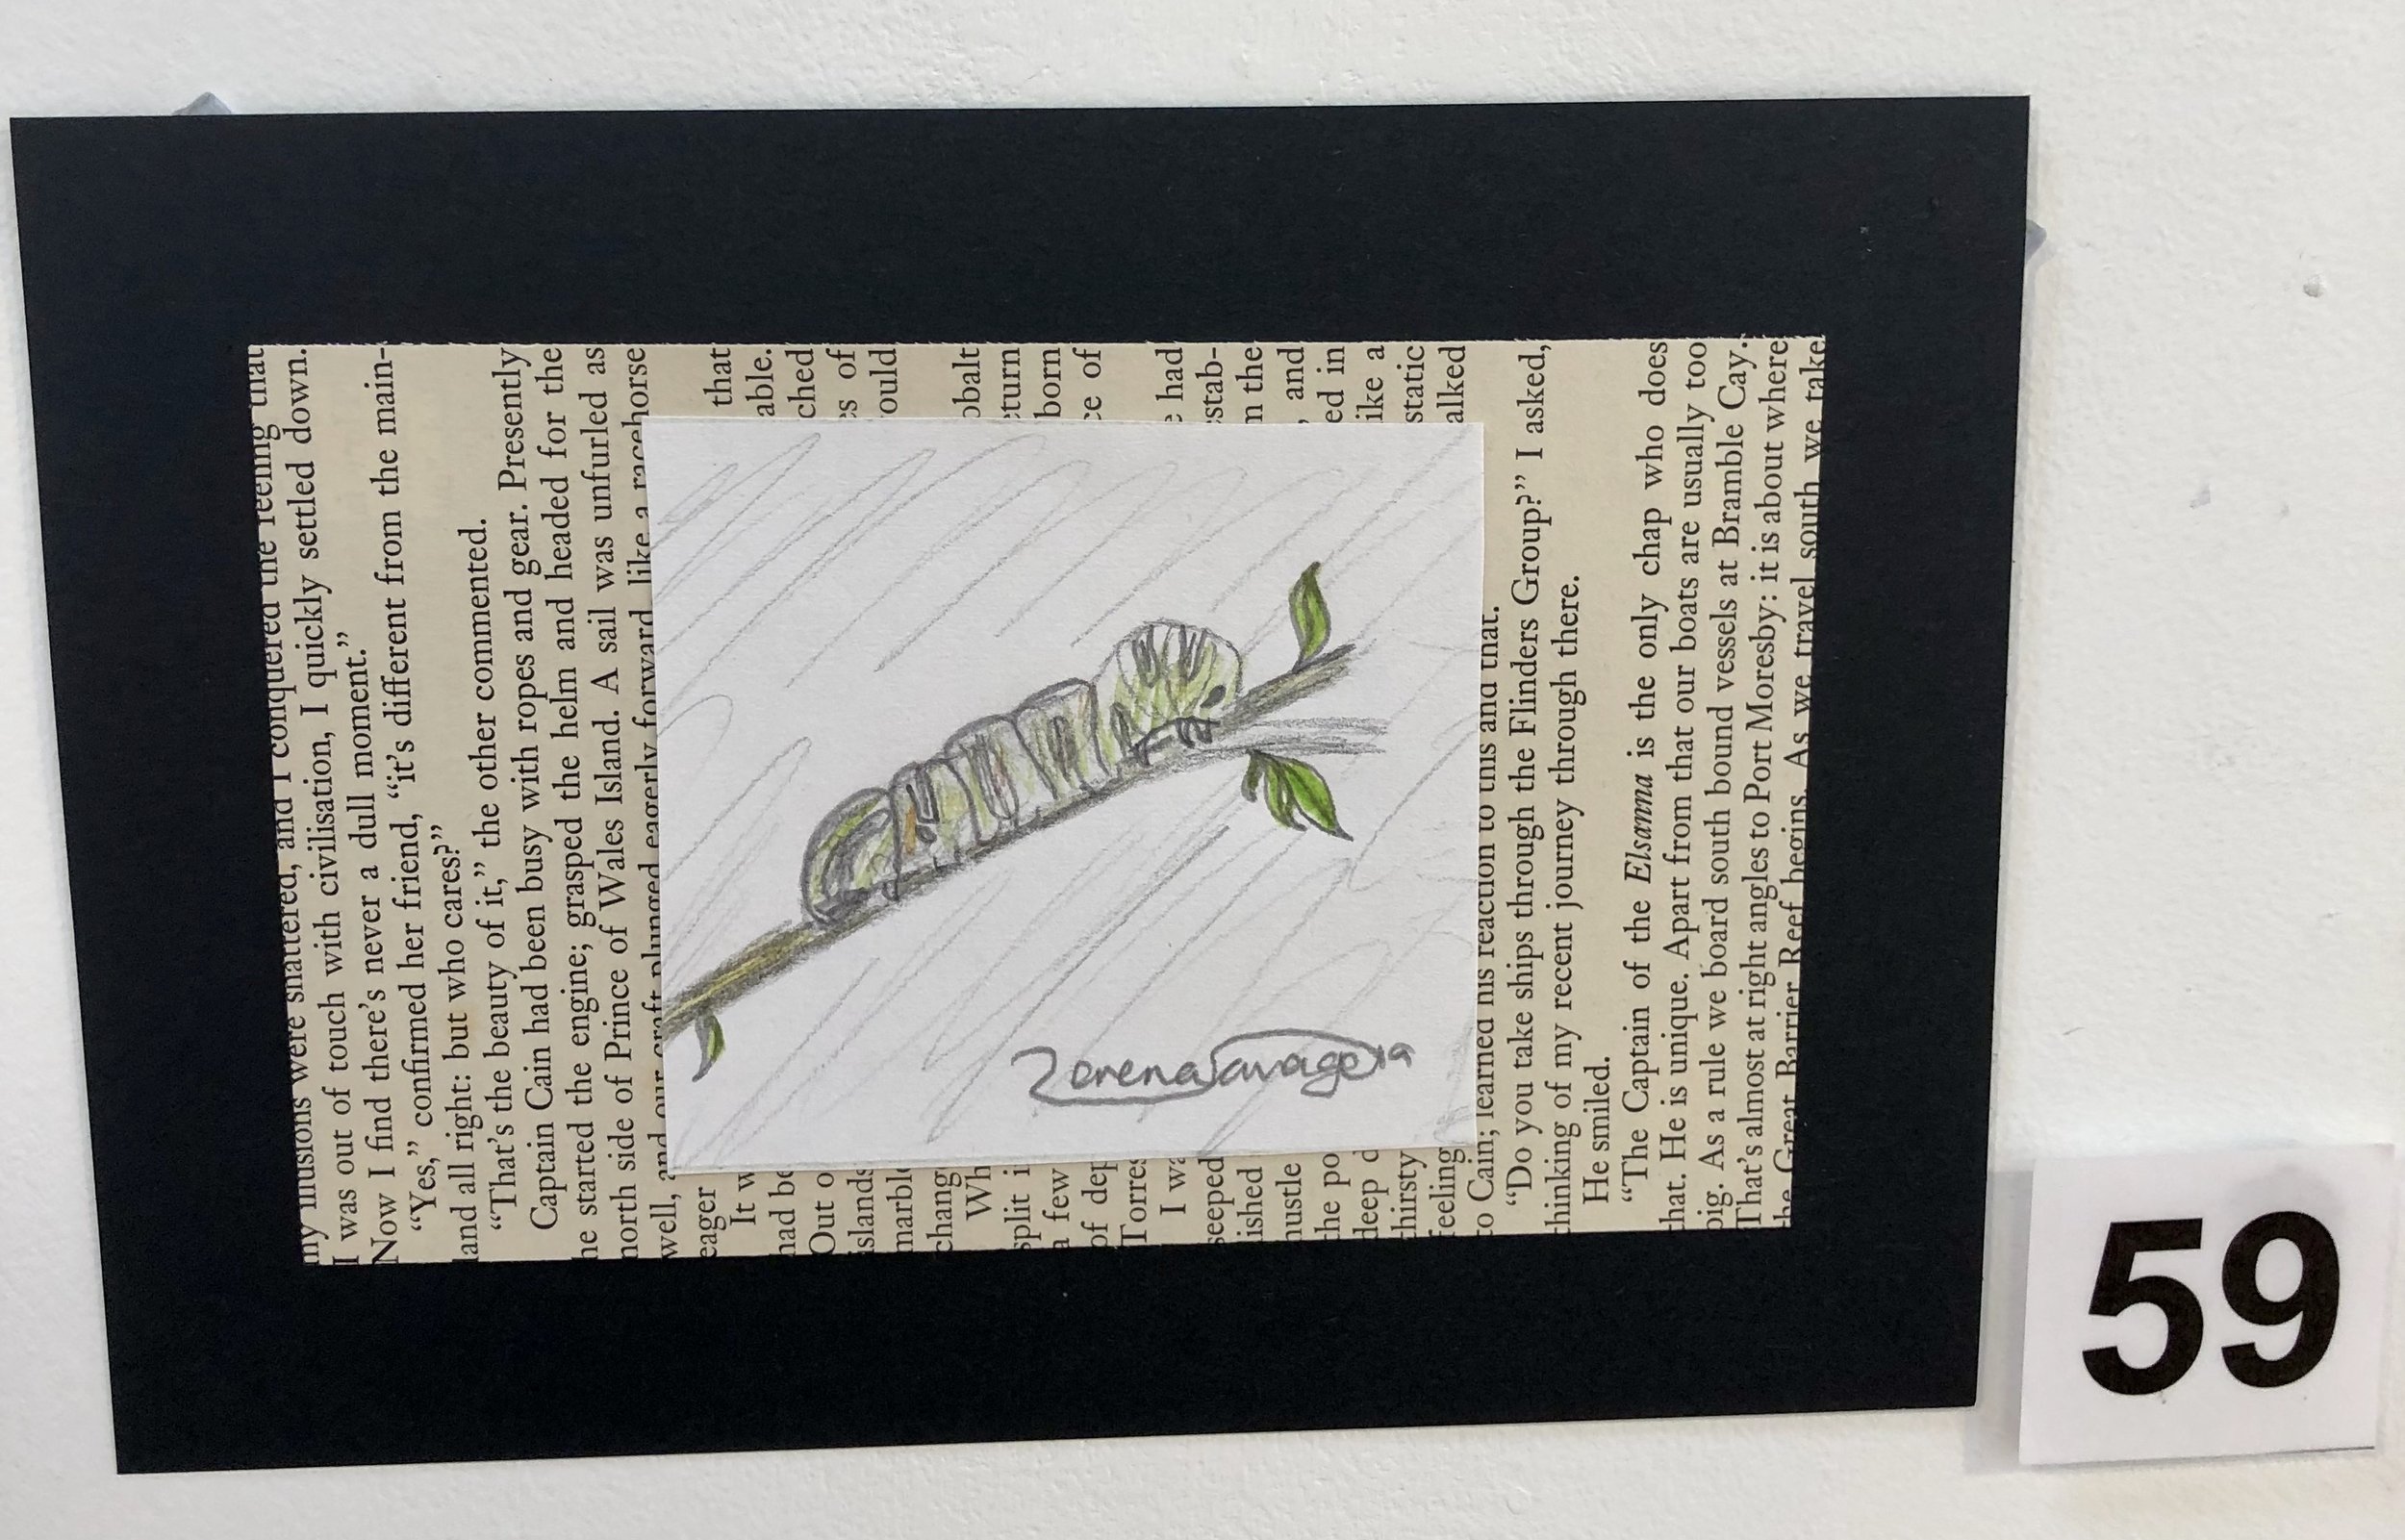 "Caterpillar" by Serena Savage